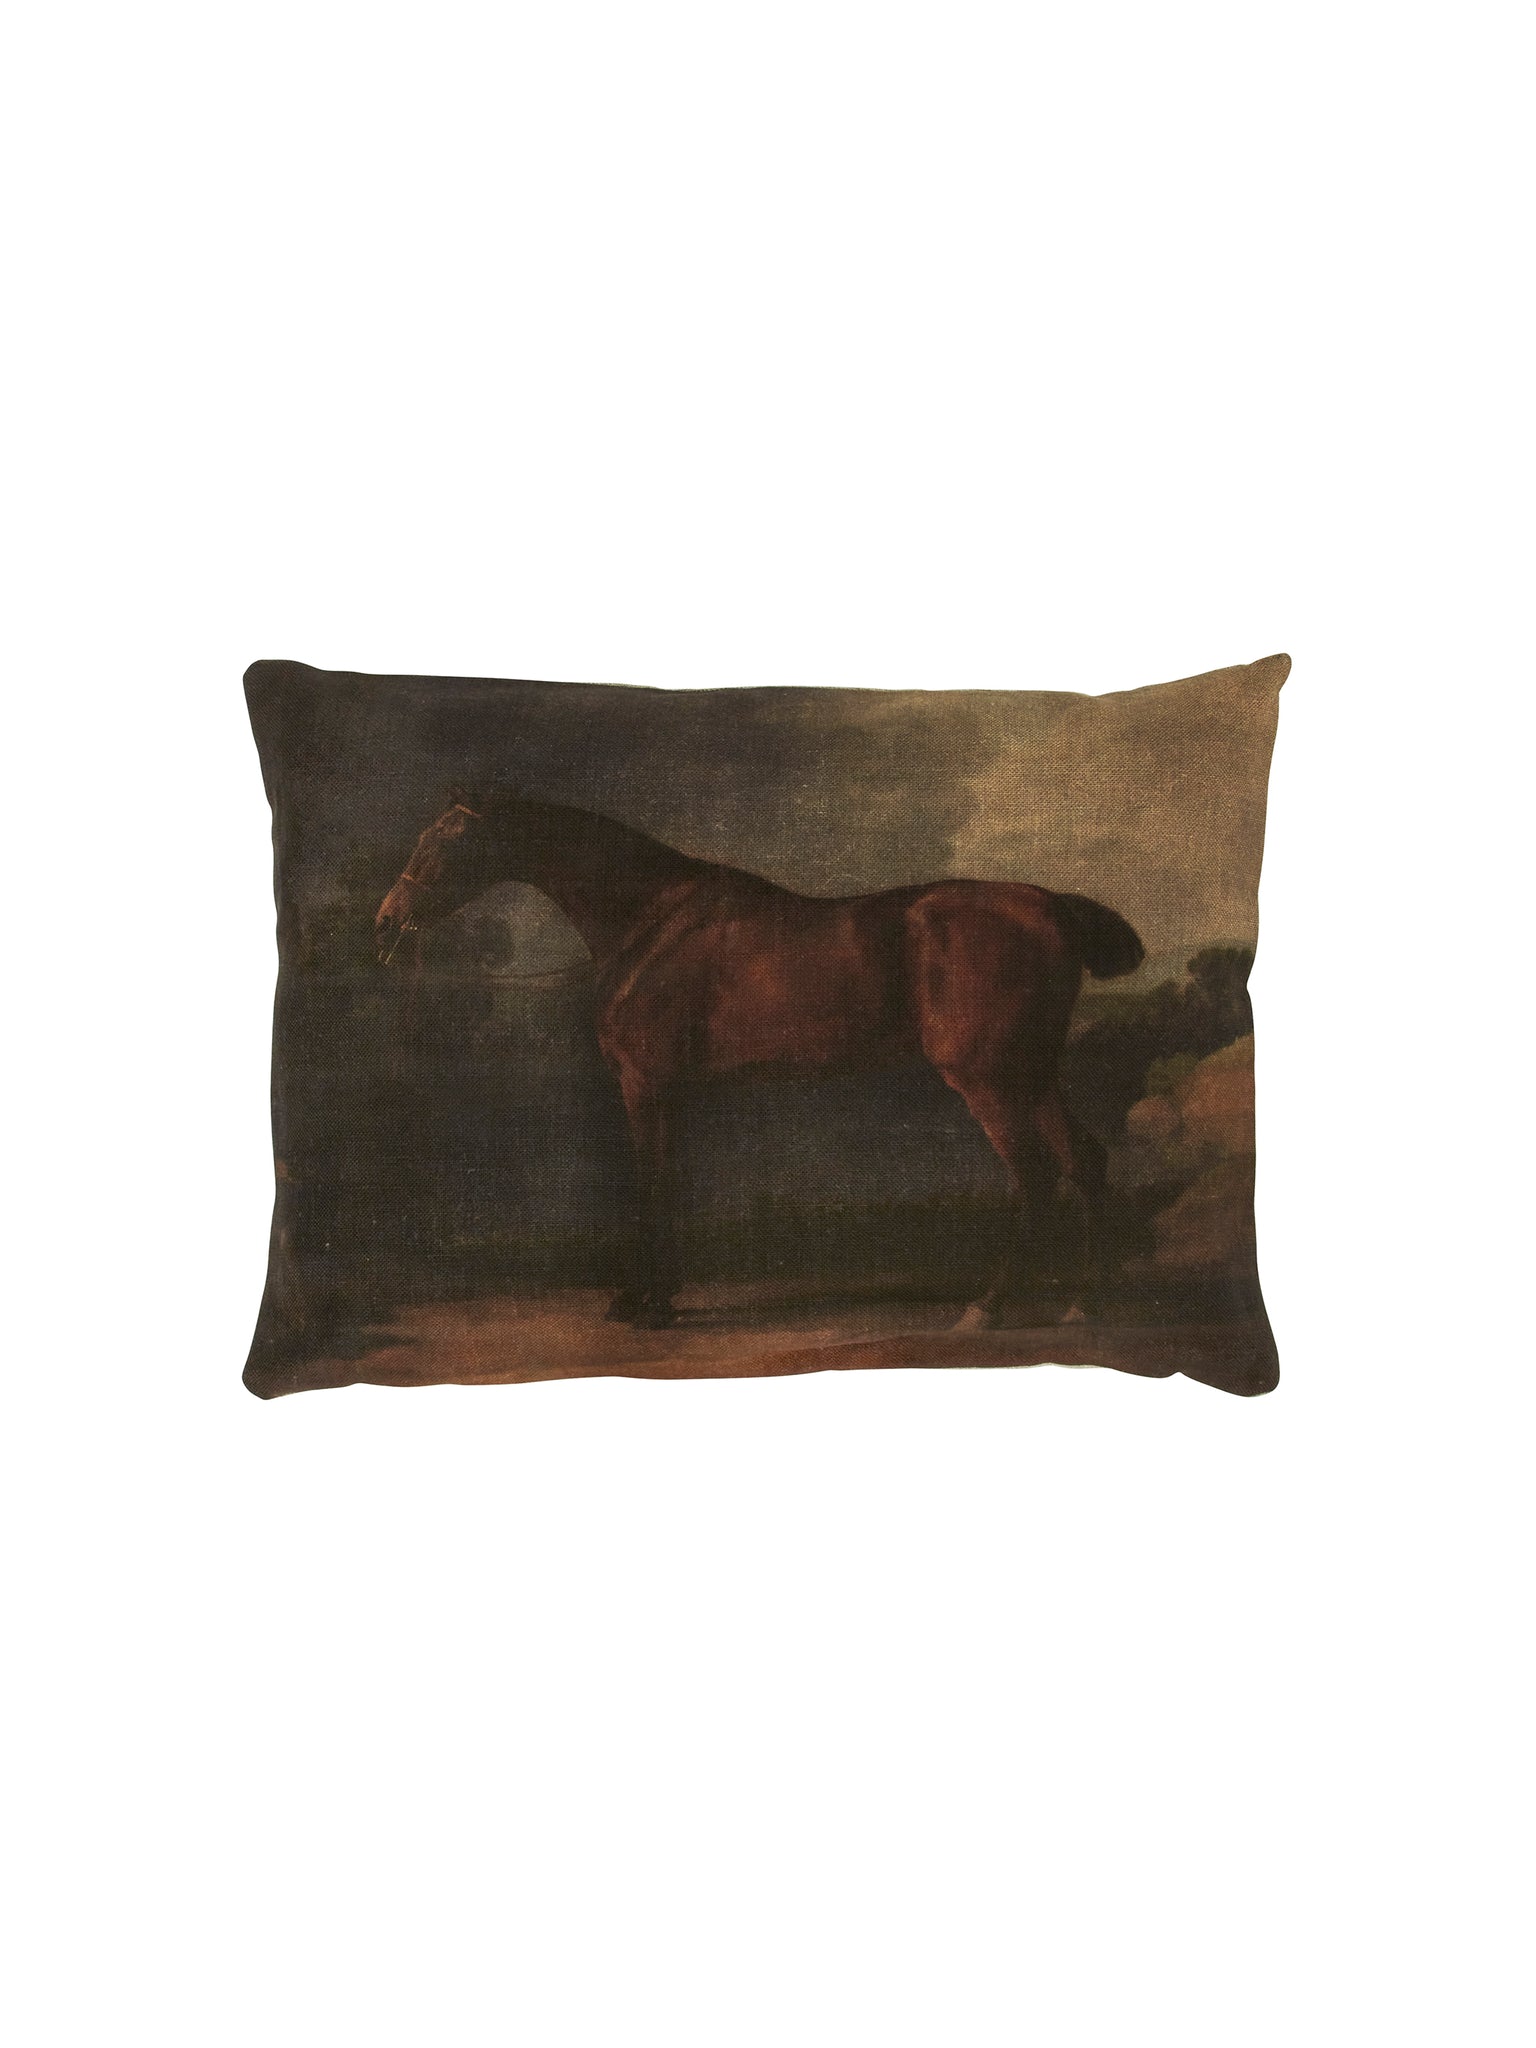 Thoroughbred Horse Pillow 12" x 16" Weston Table